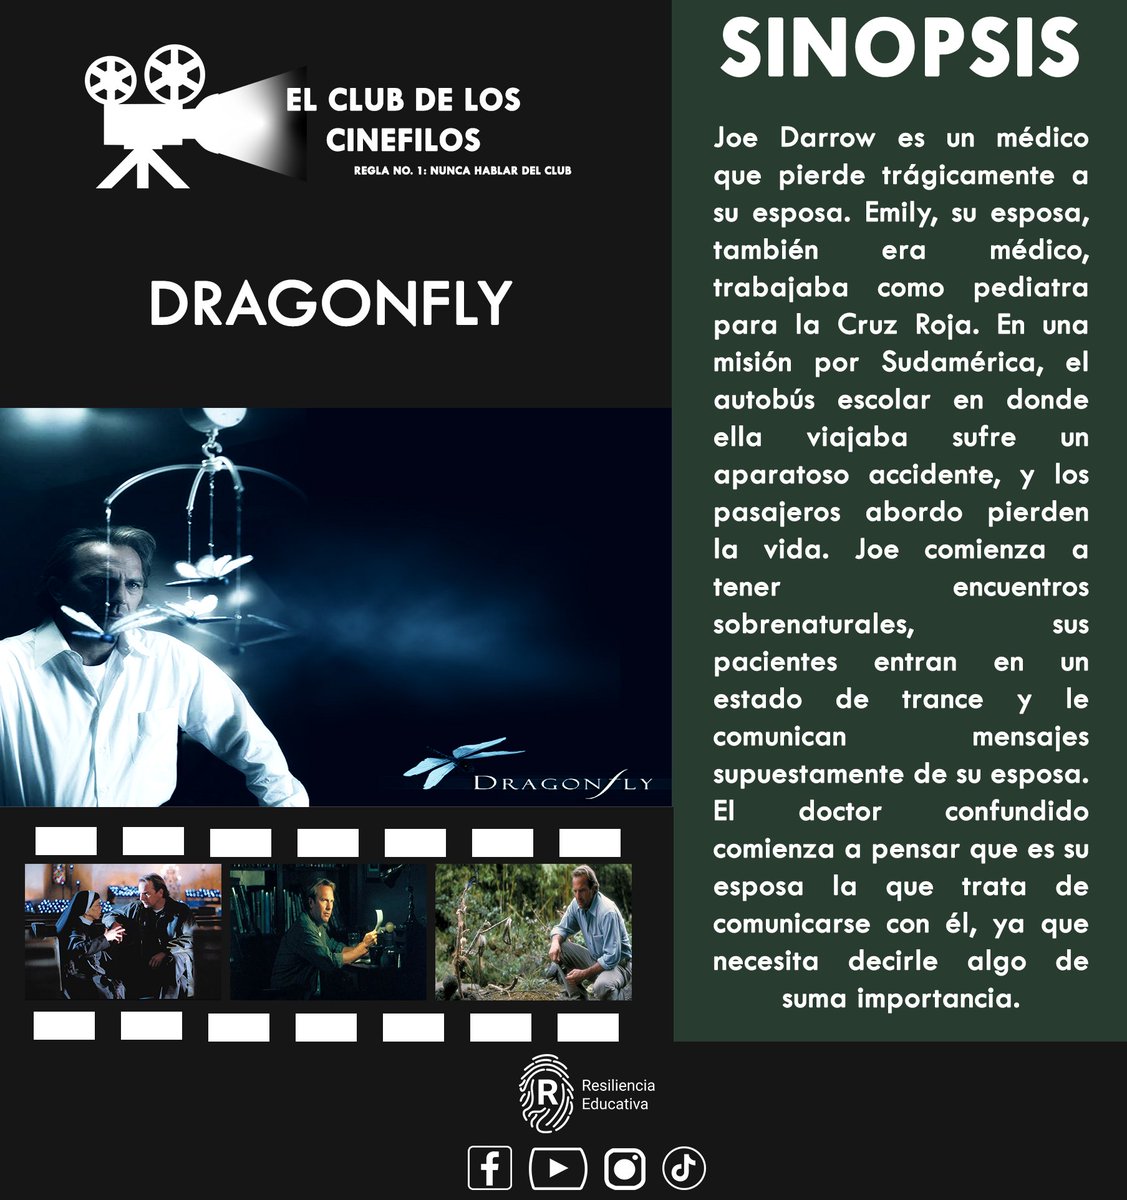 Dragonfly

#dragonfly #pelicula #movie #suspenso #paranormal #medium https://t.co/GTQyHI1x2z